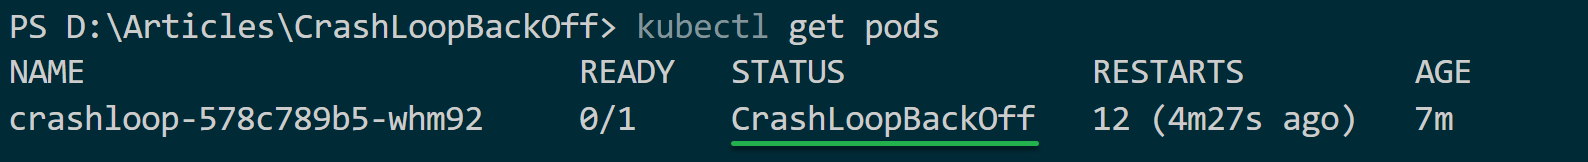 Examining the pod with the CrashLoopBackoff status